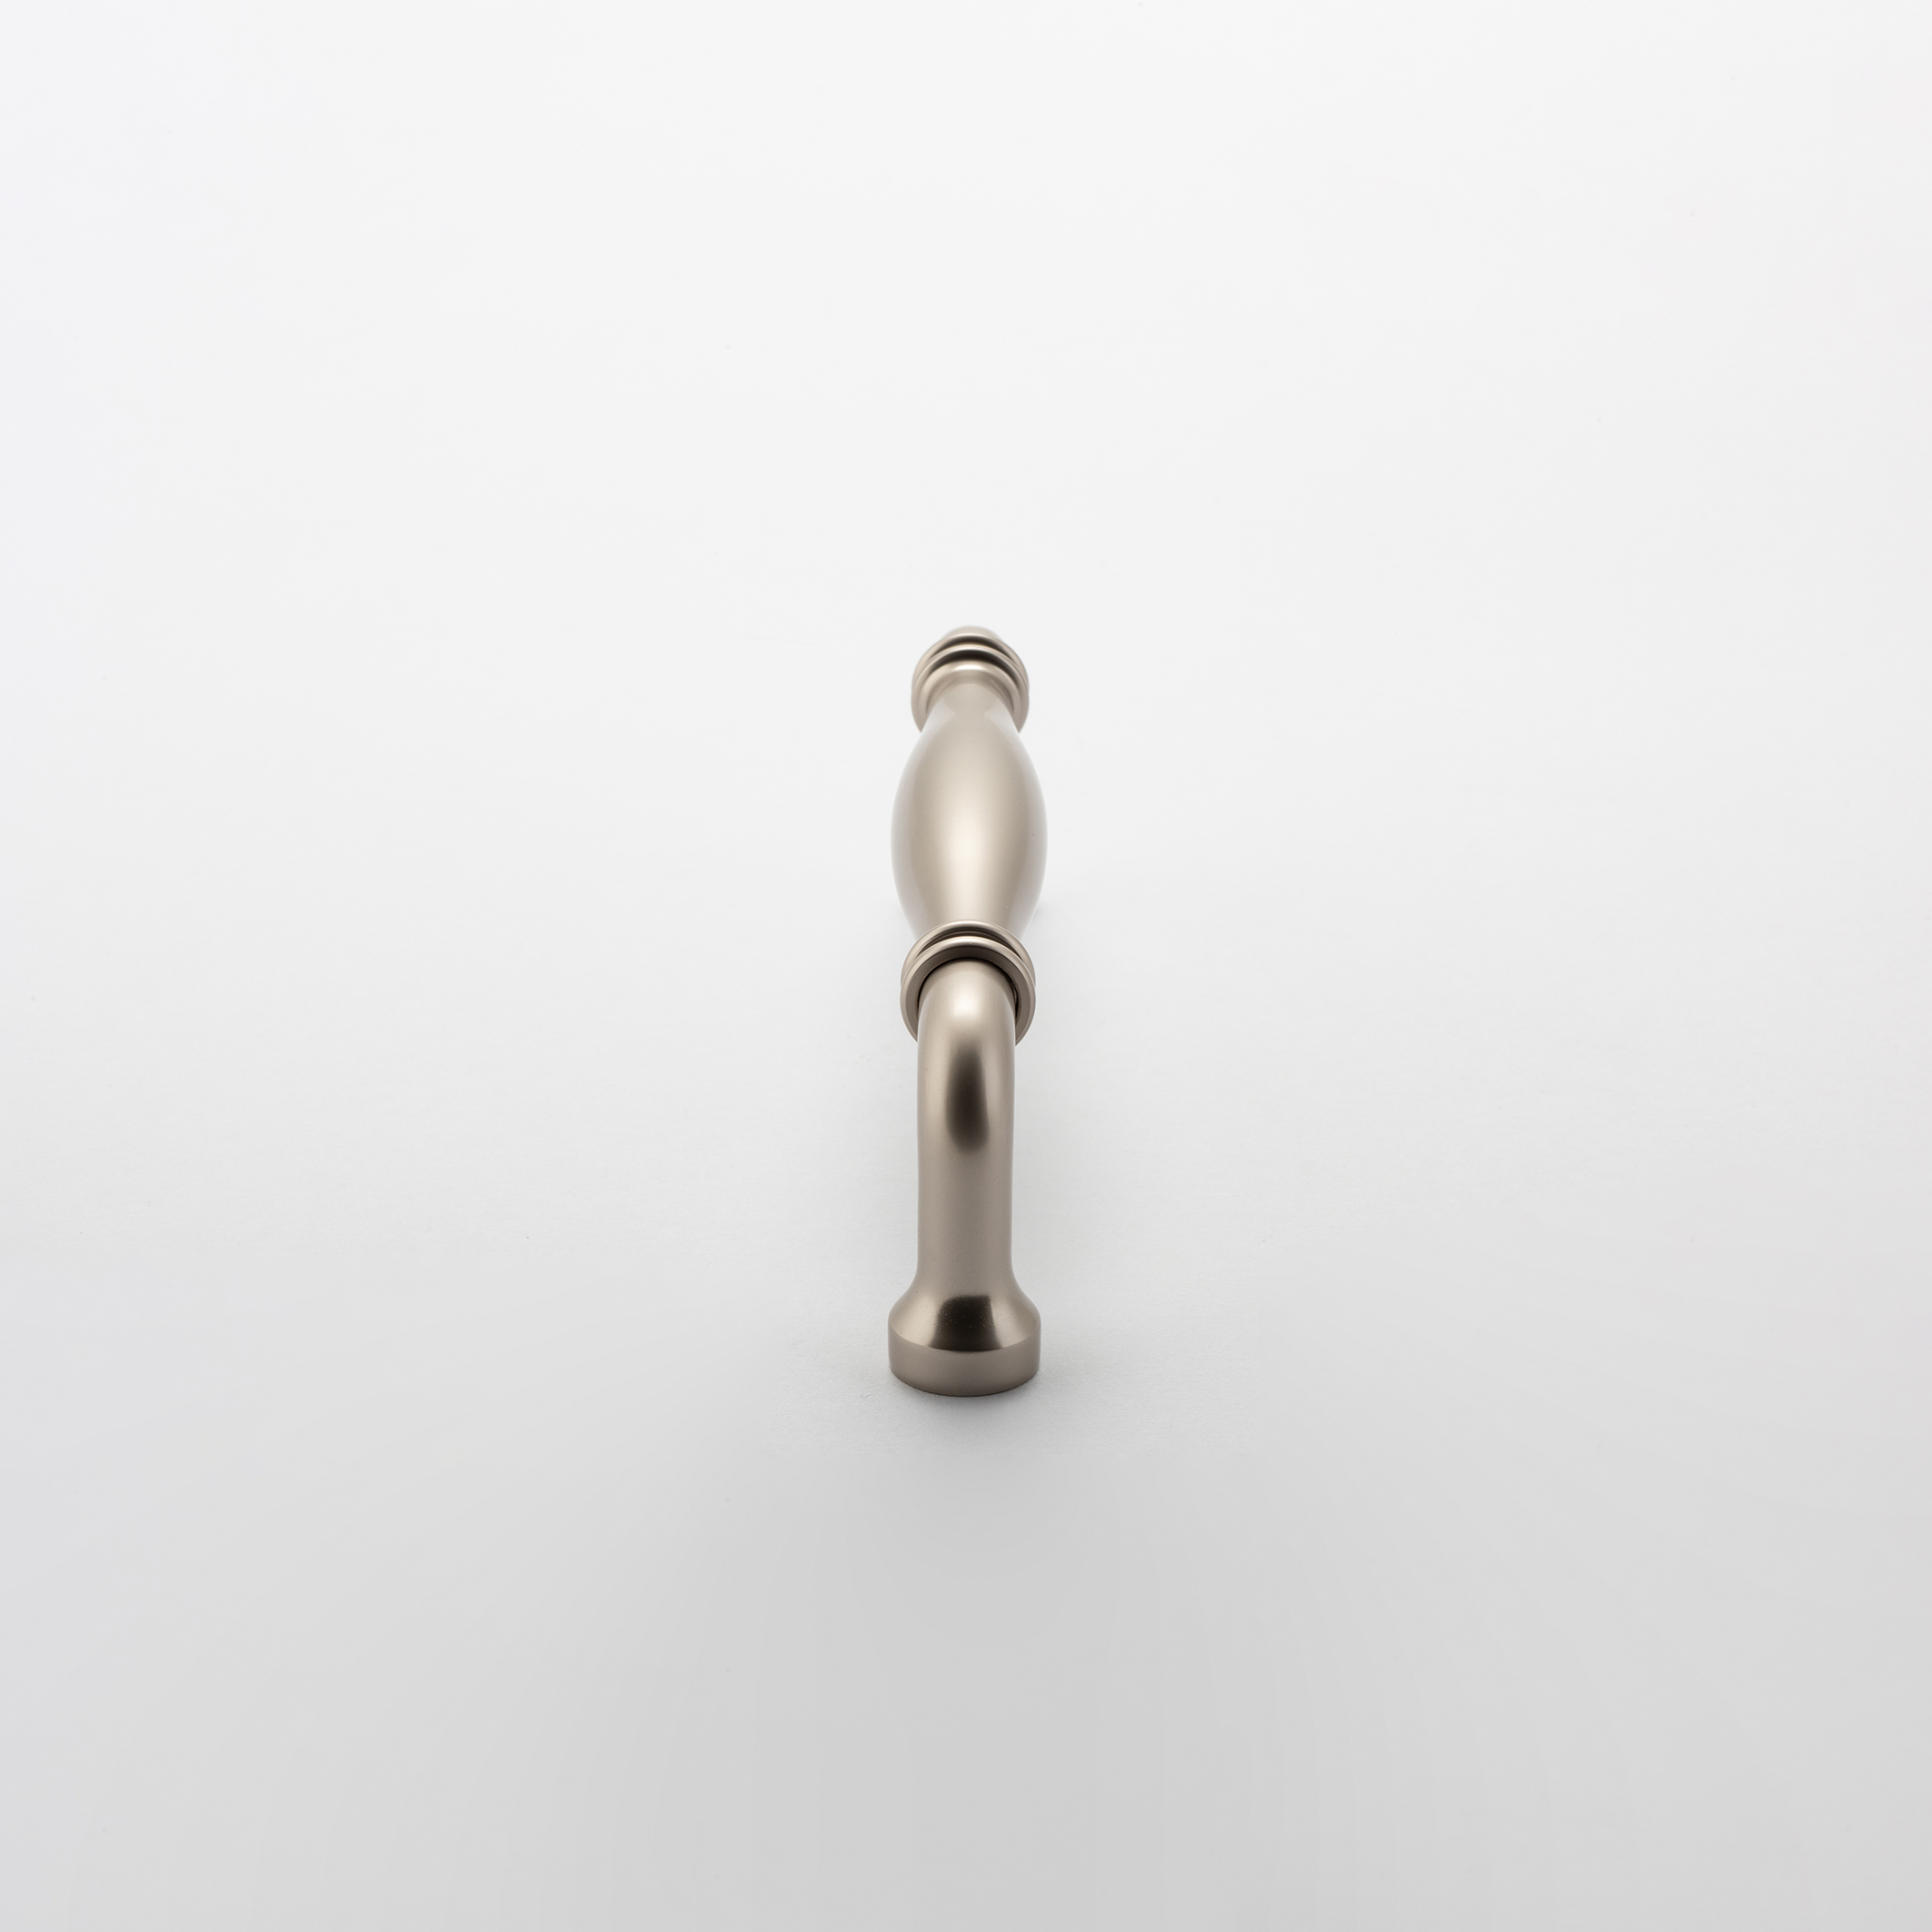 21079 - Sarlat Cabinet Pull - CTC160mm - Satin Nickel